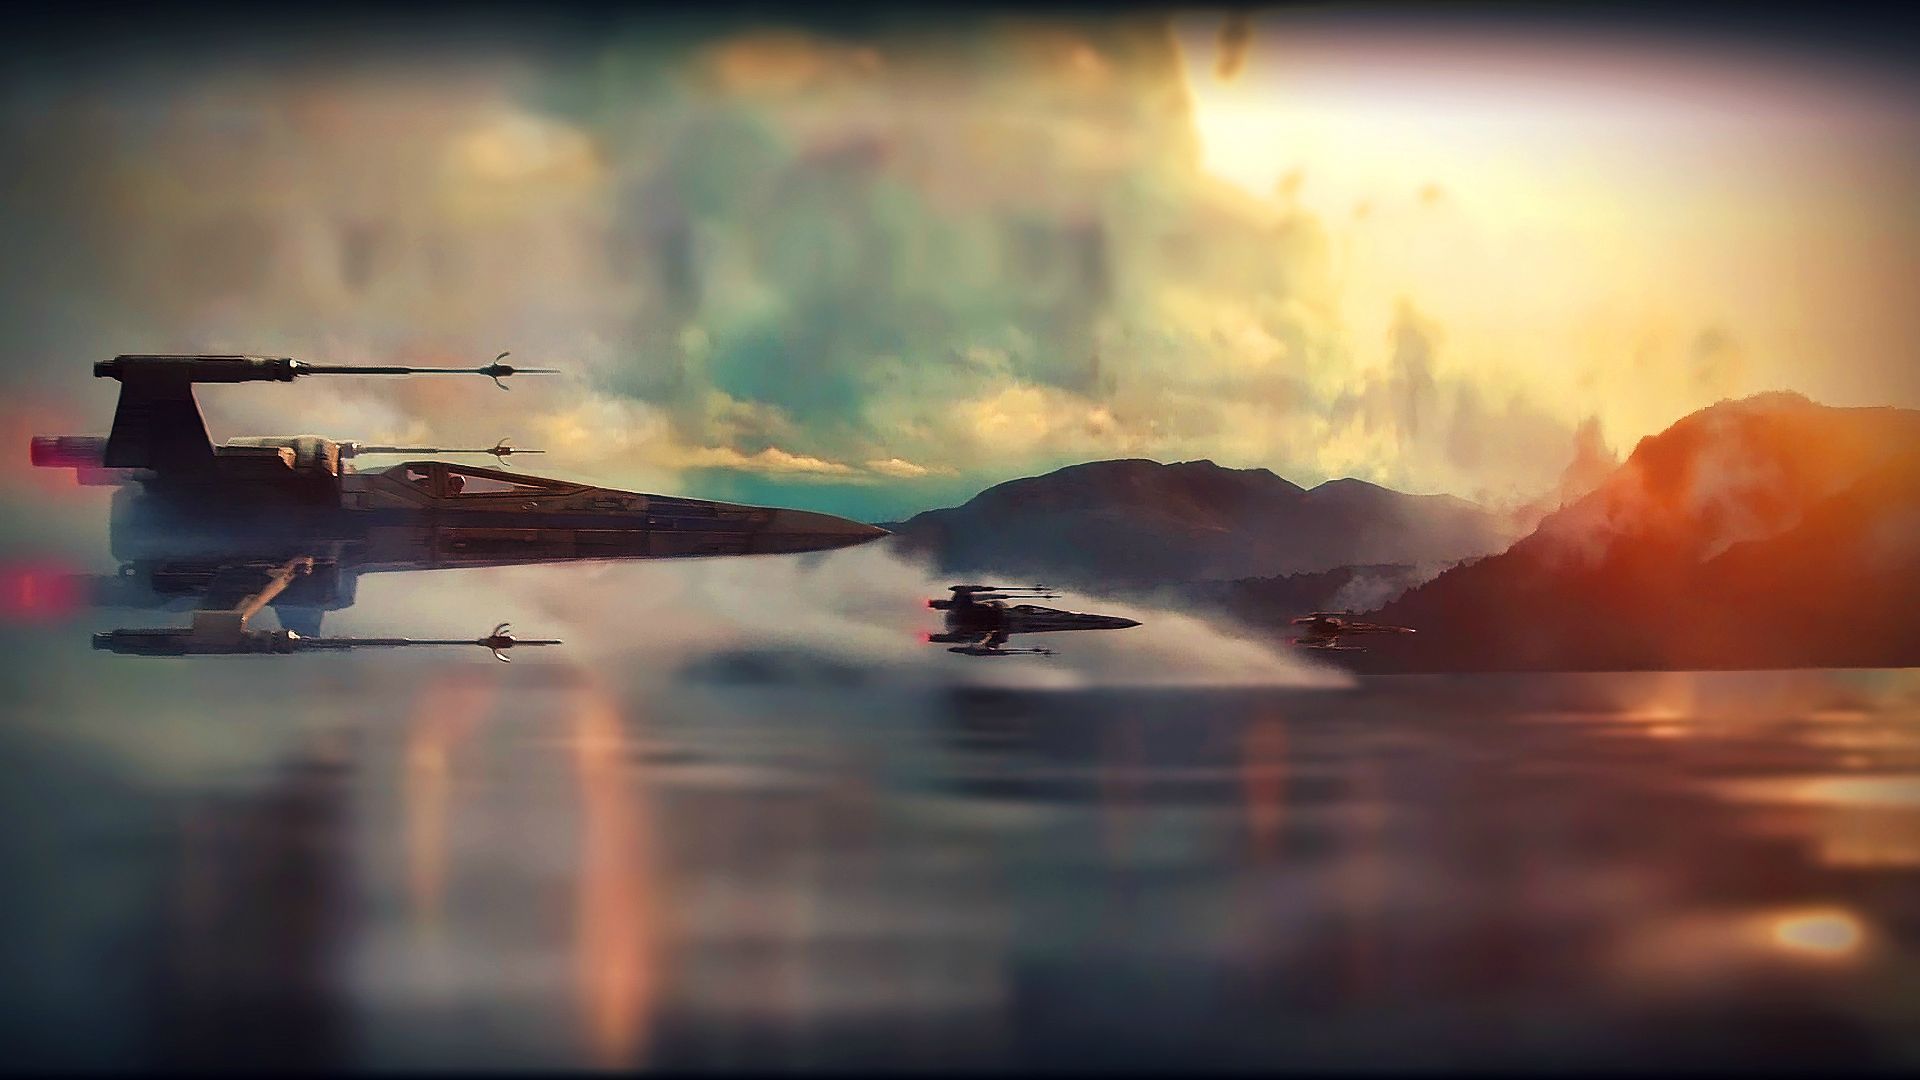 Star Wars: The Force Awakens Desktop Wallpapers - Album on Imgur